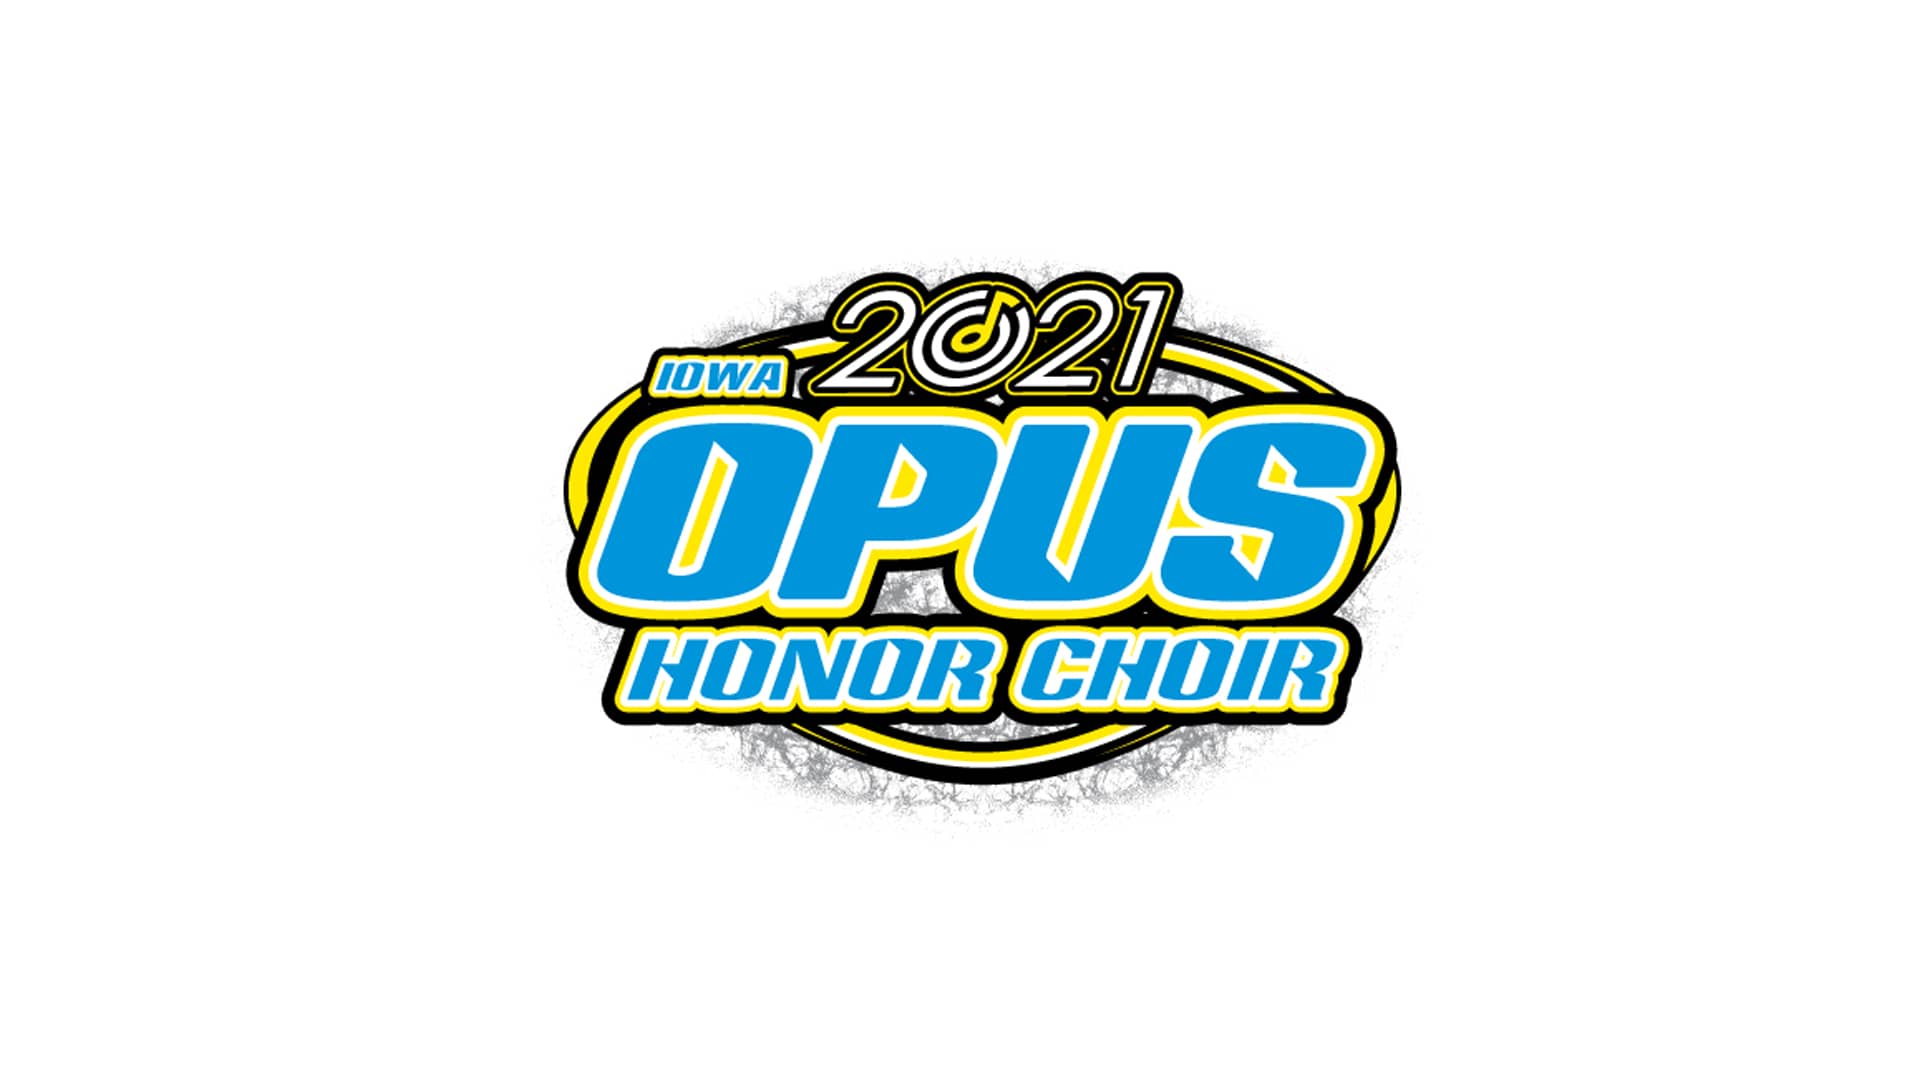 2021 Iowa Opus Honor Choir Live Stream on Vimeo